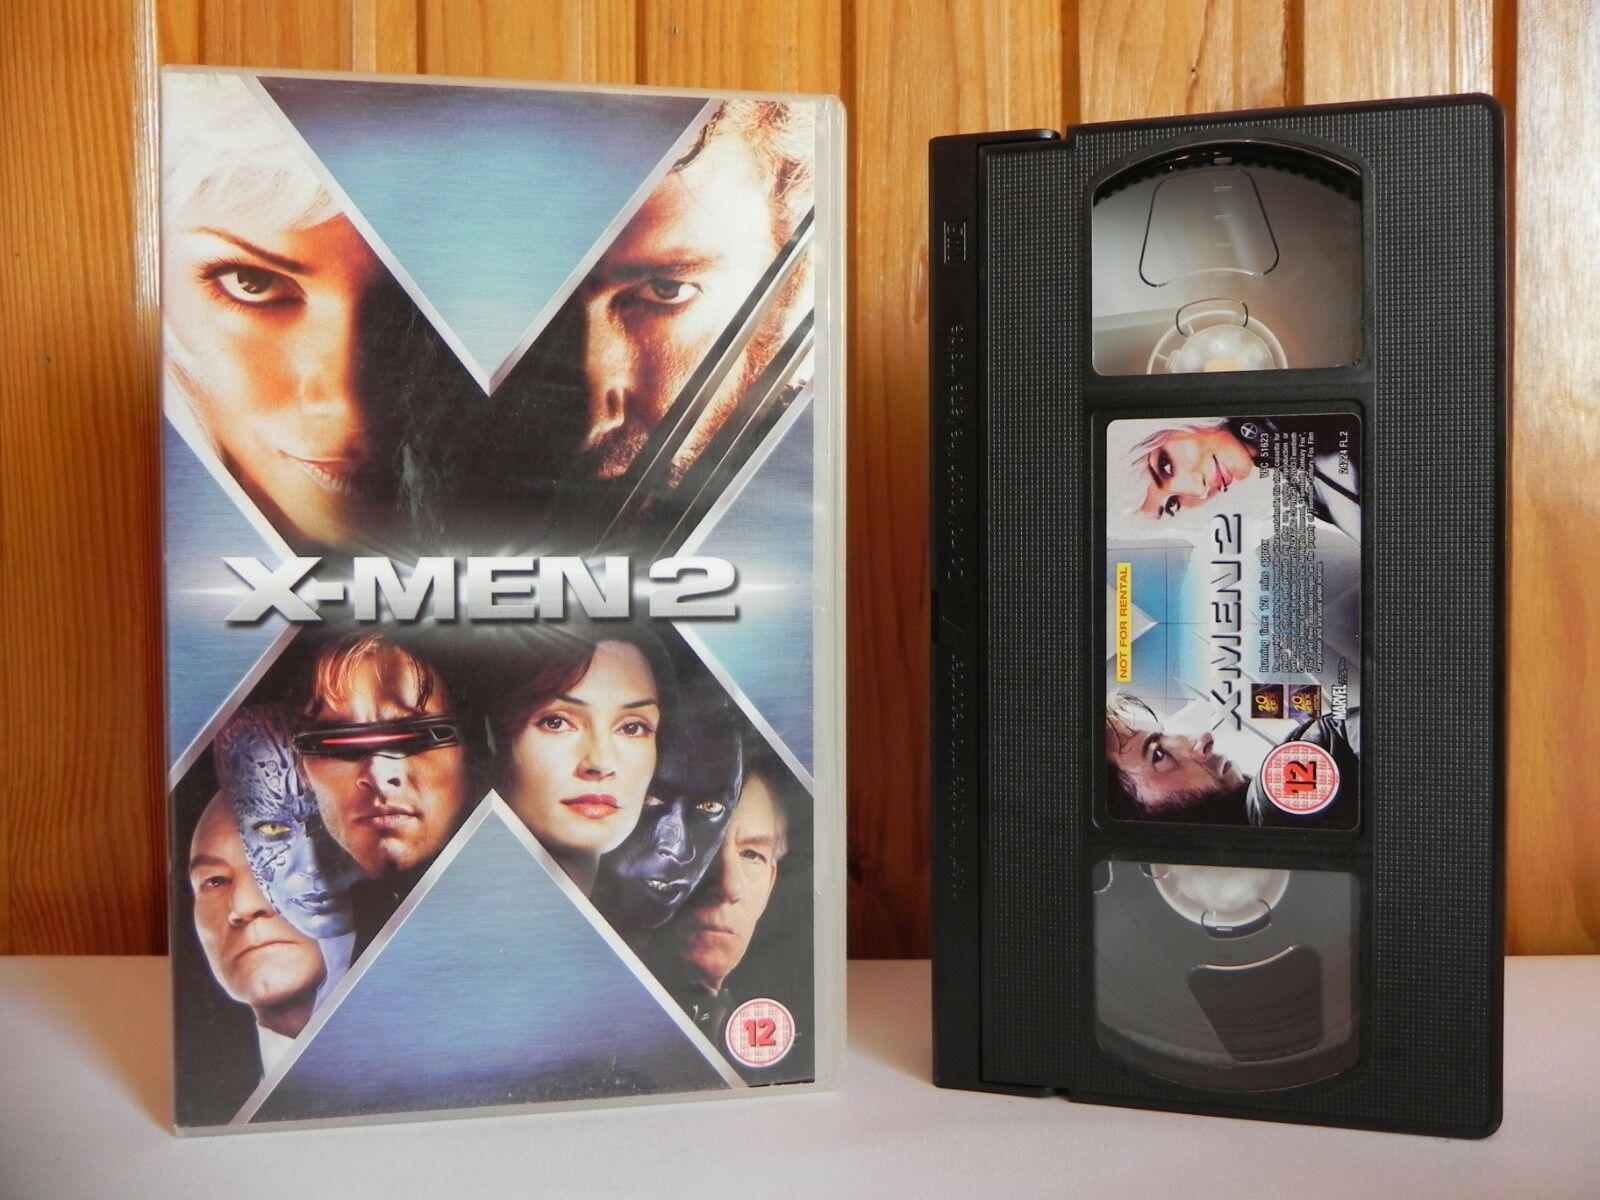 X-Men 2 - 20th Century Fox - Action - Patrick Stewart - Hugh Jackman - Pal VHS-